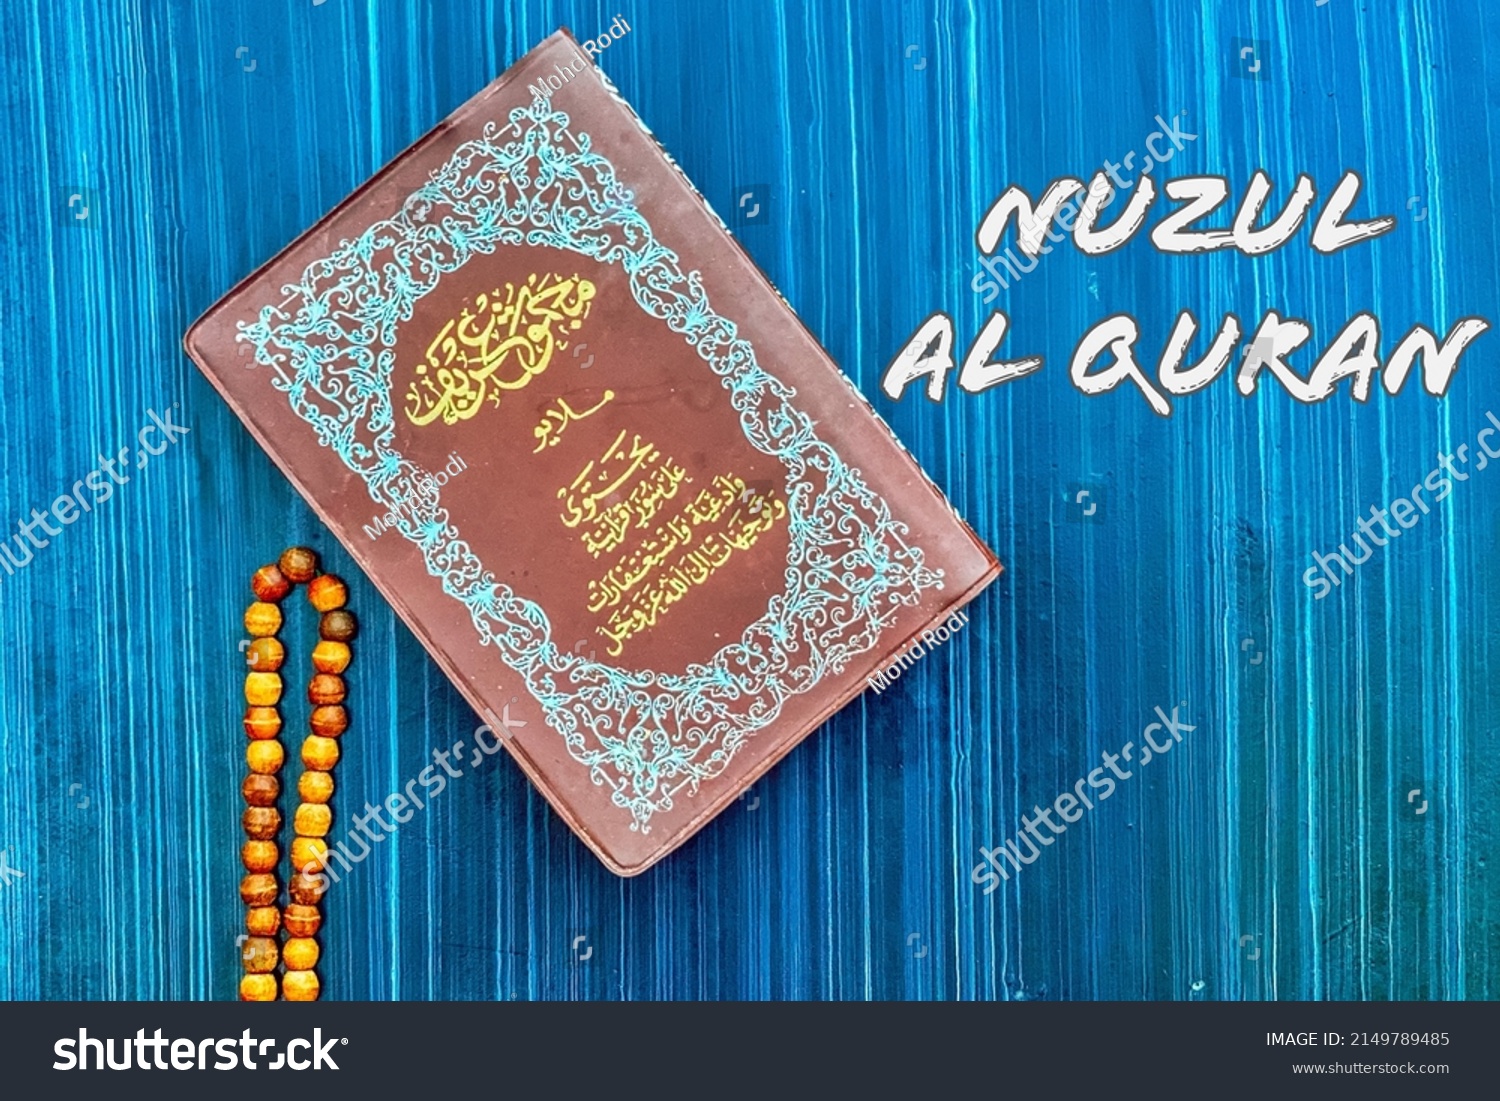 Holy Quran Nuzul Al Quran Words Stock Photo 2149789485 | Shutterstock